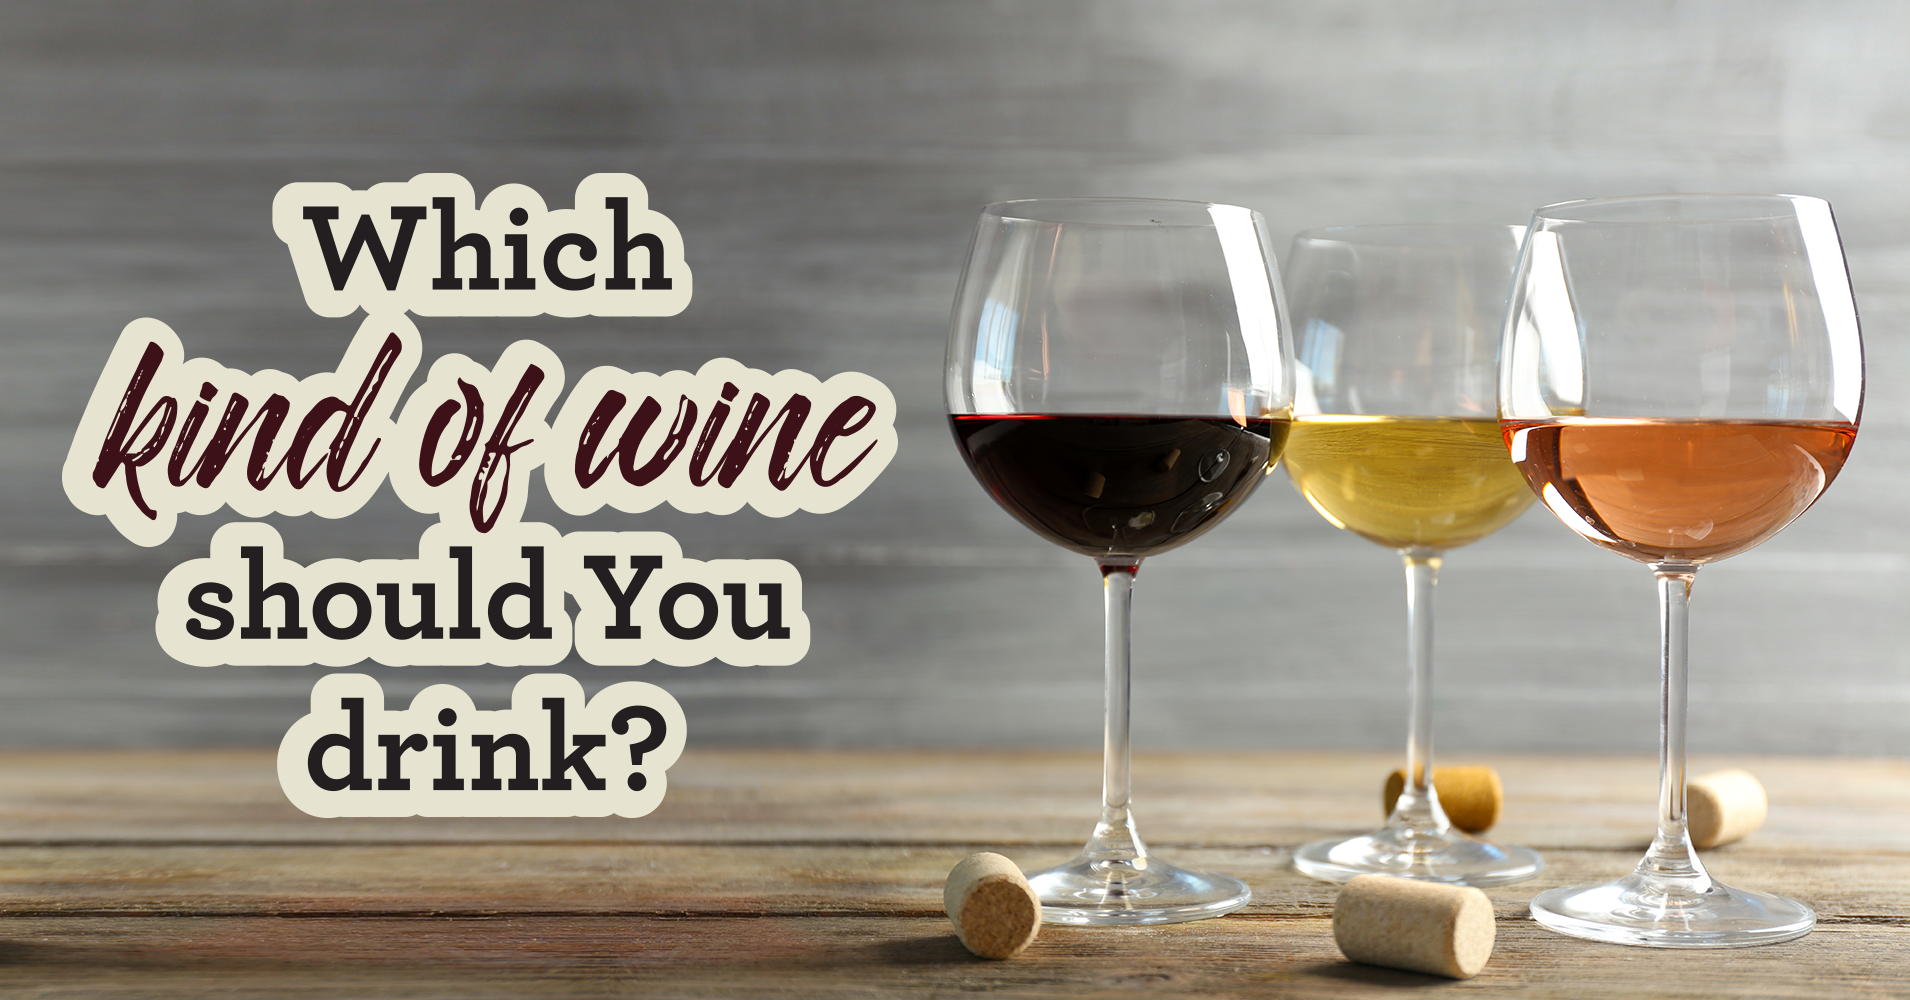 What kind of wine should I drink?